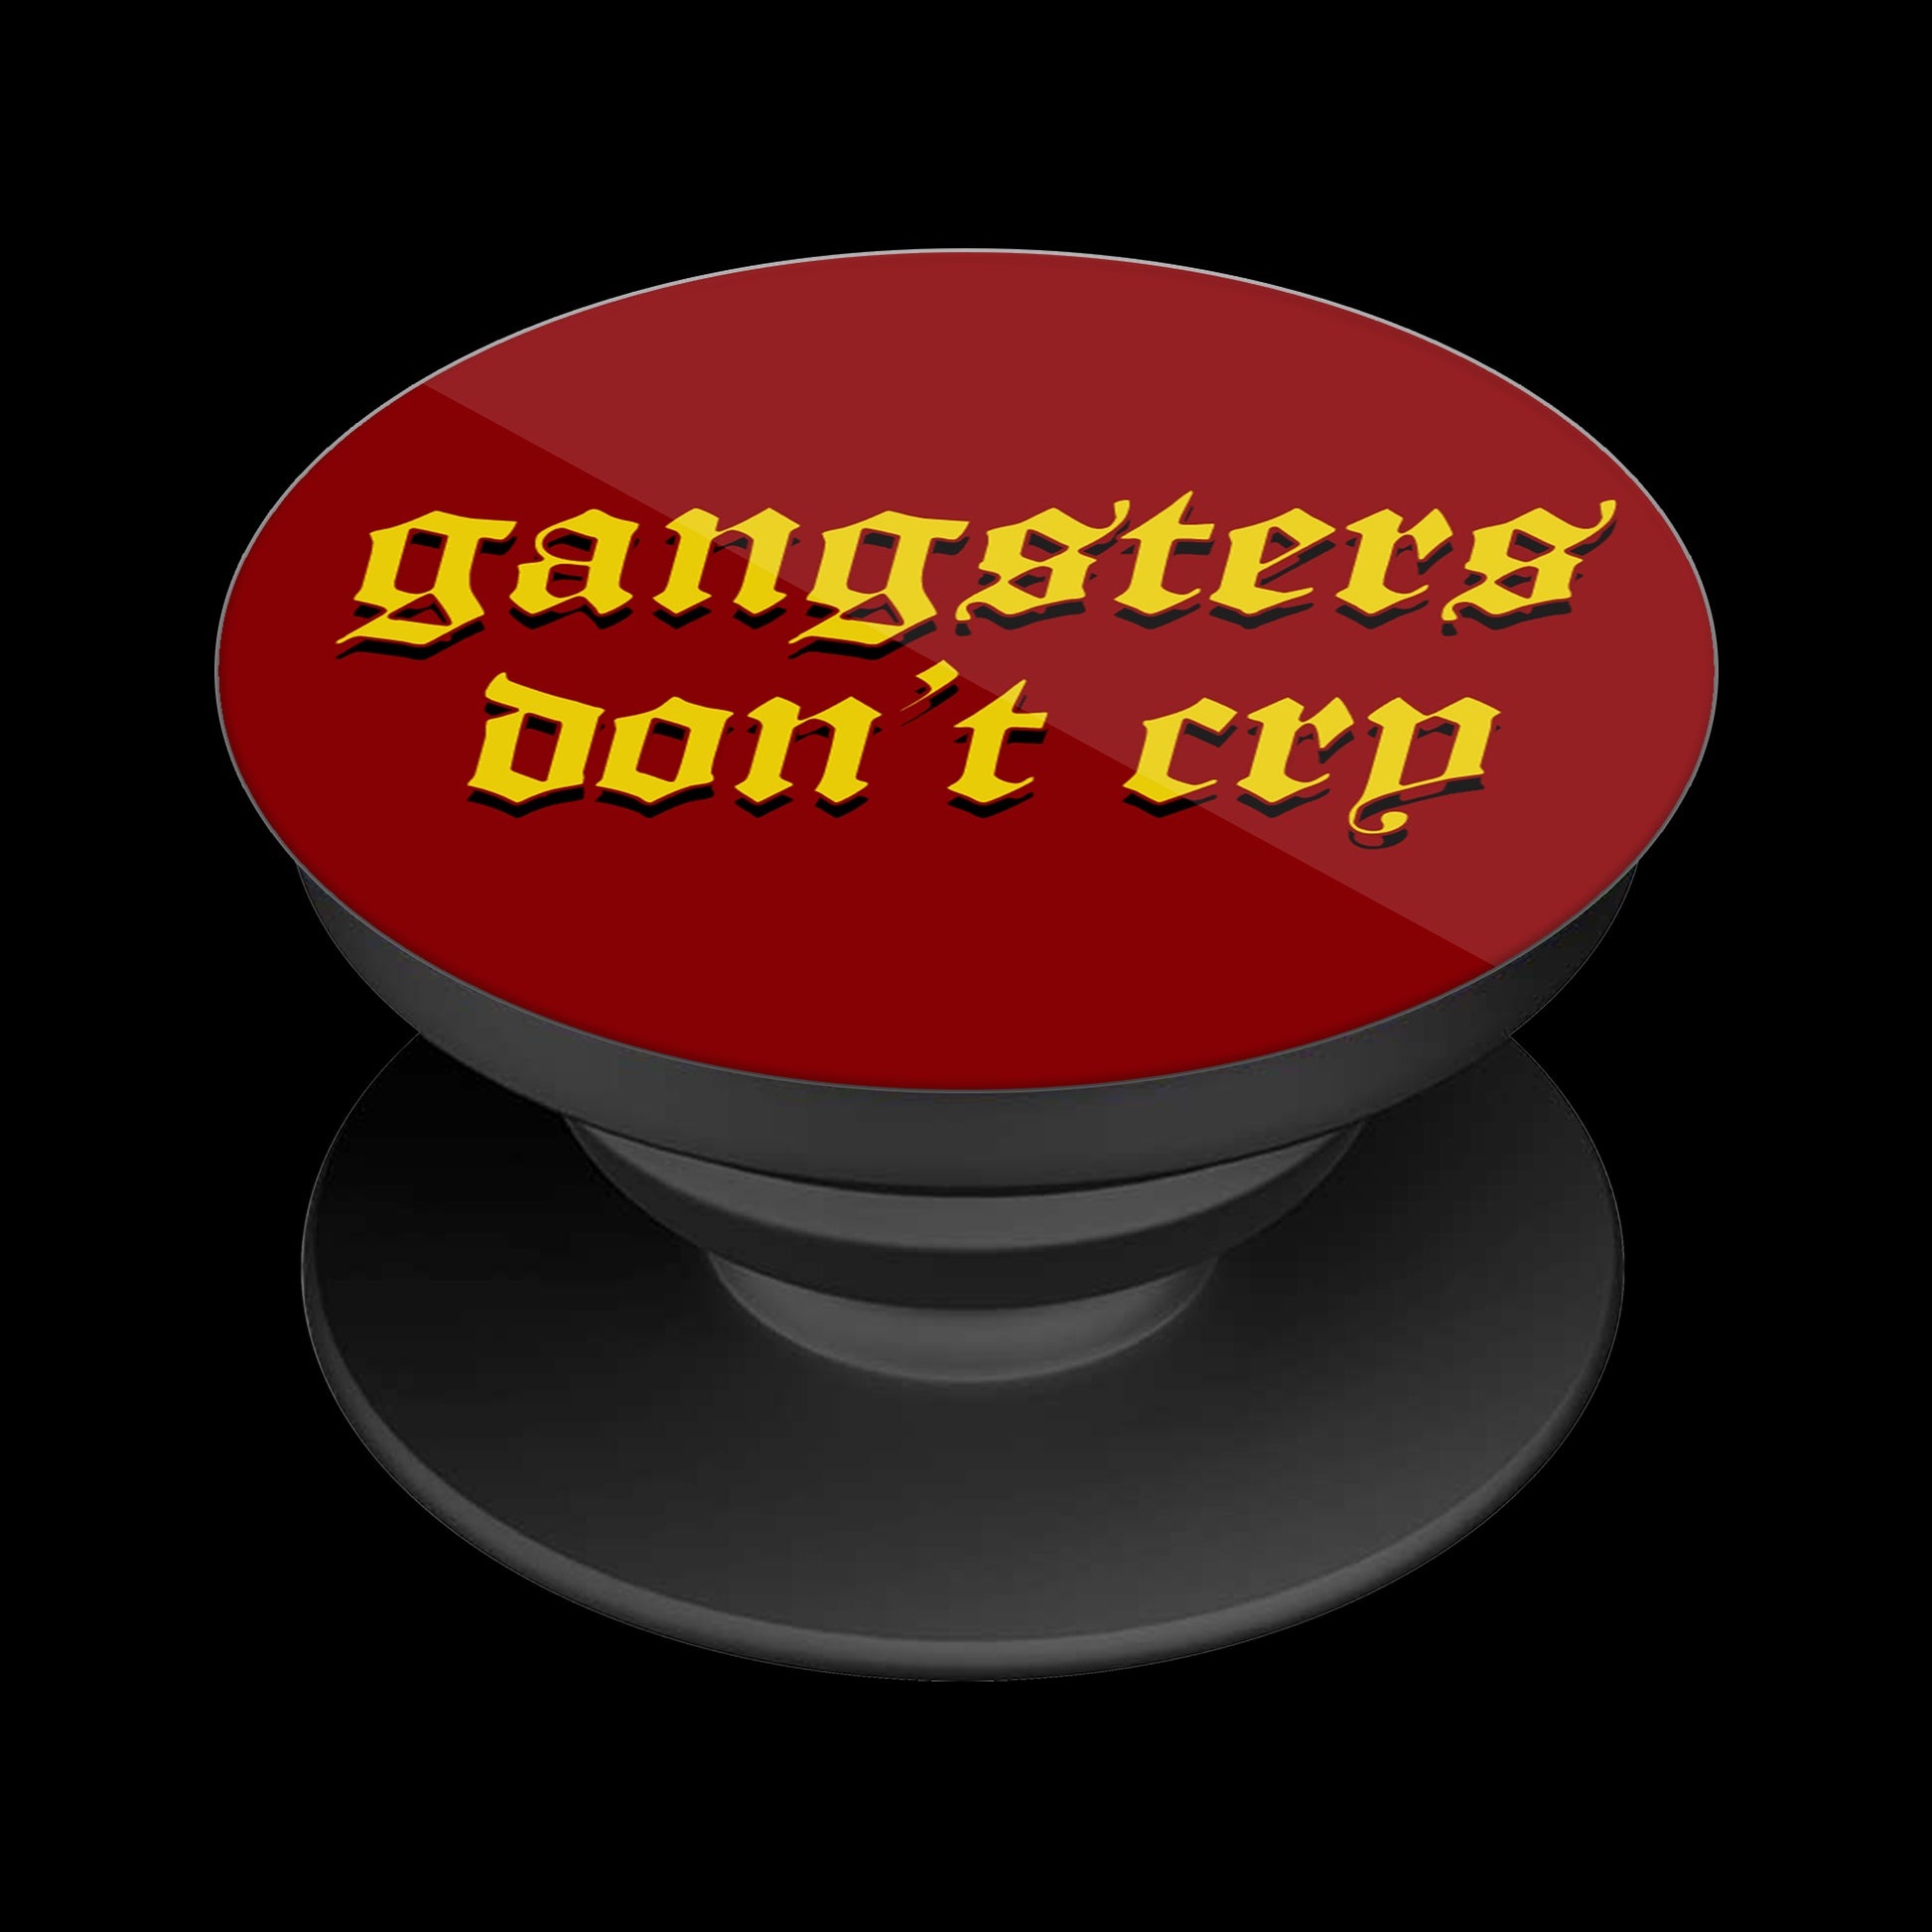 Gangsters don't cry Popholder